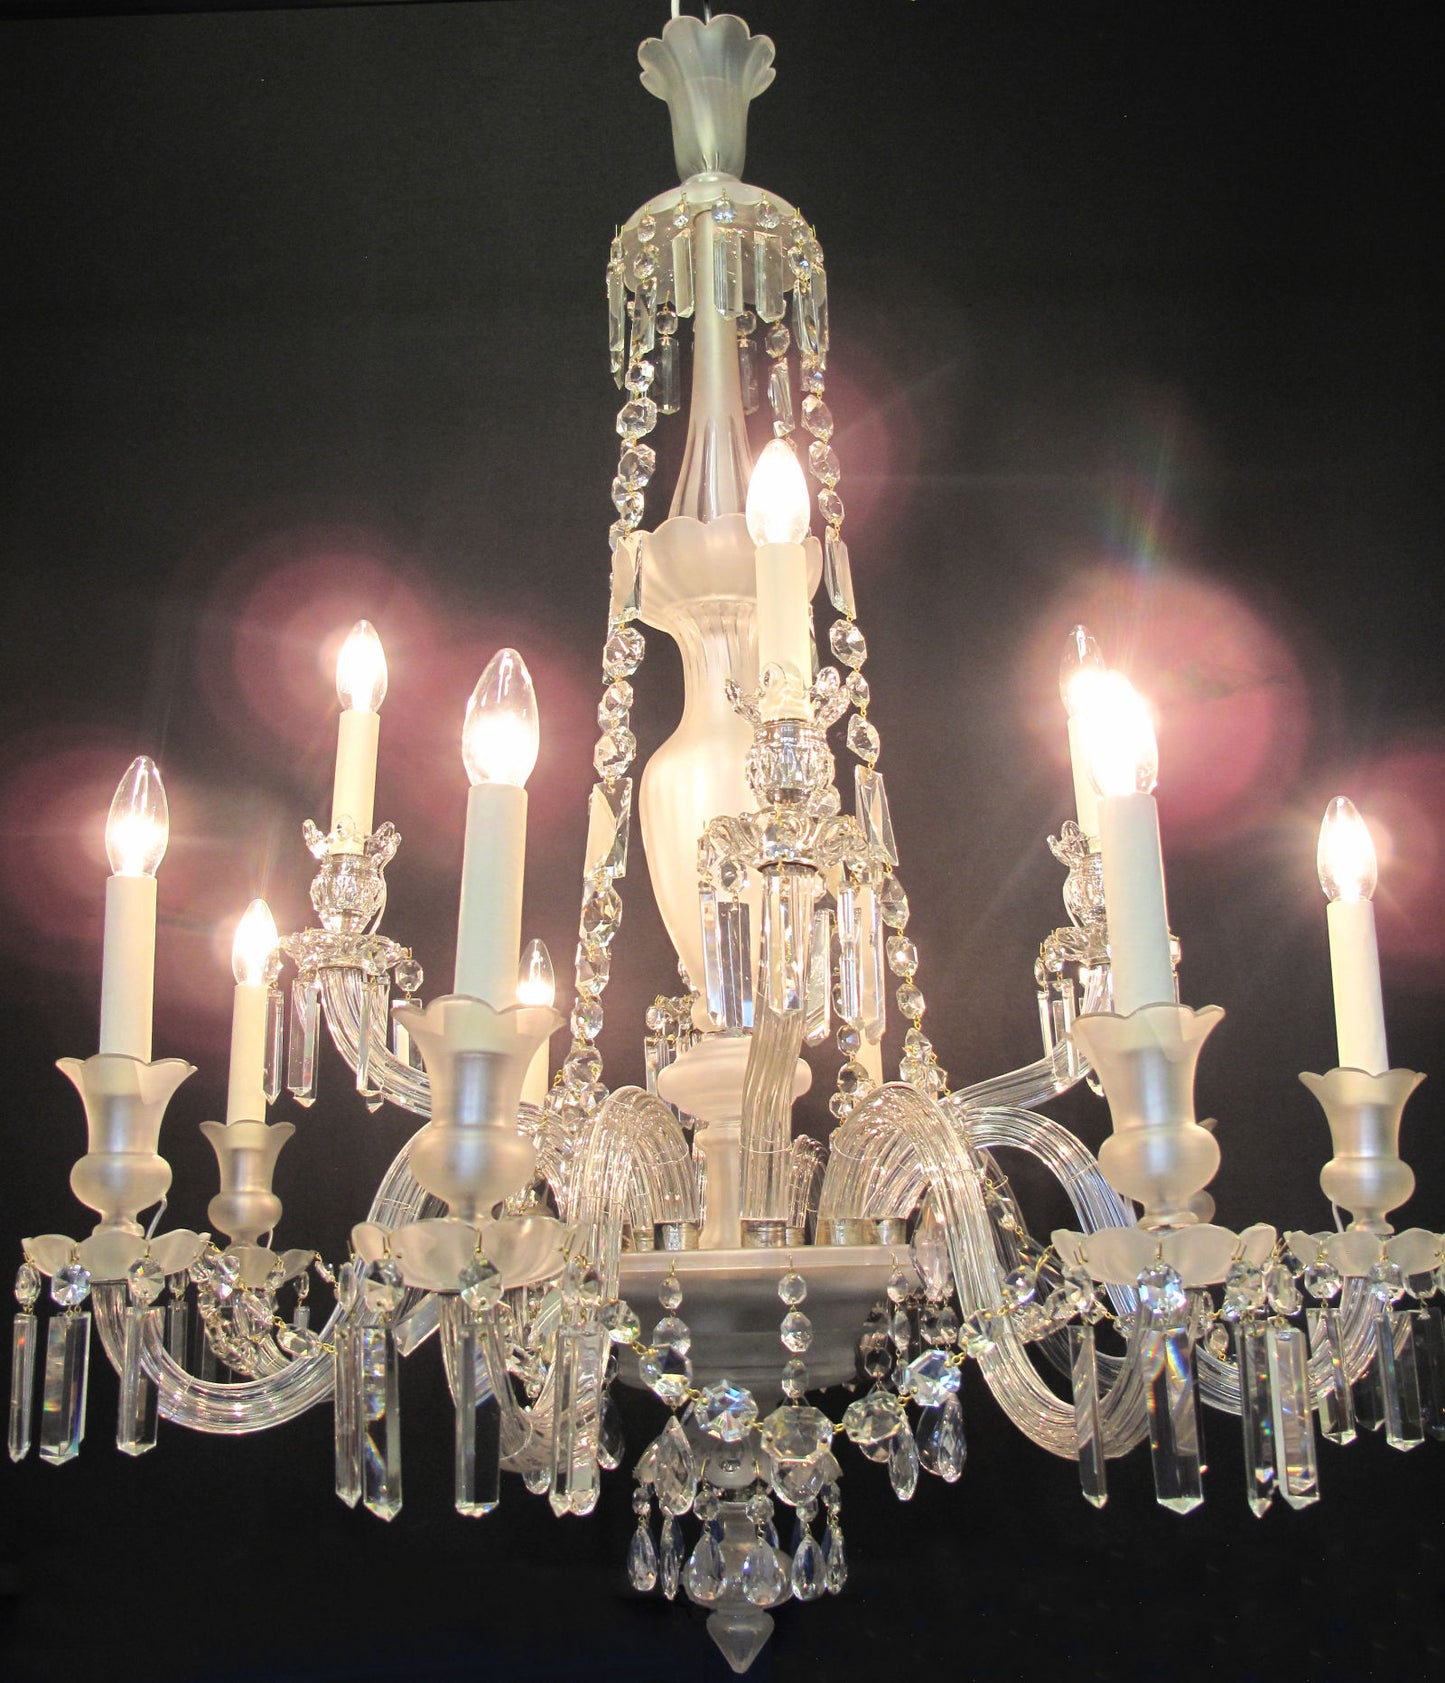 12 arm victorian chandelier, lit up